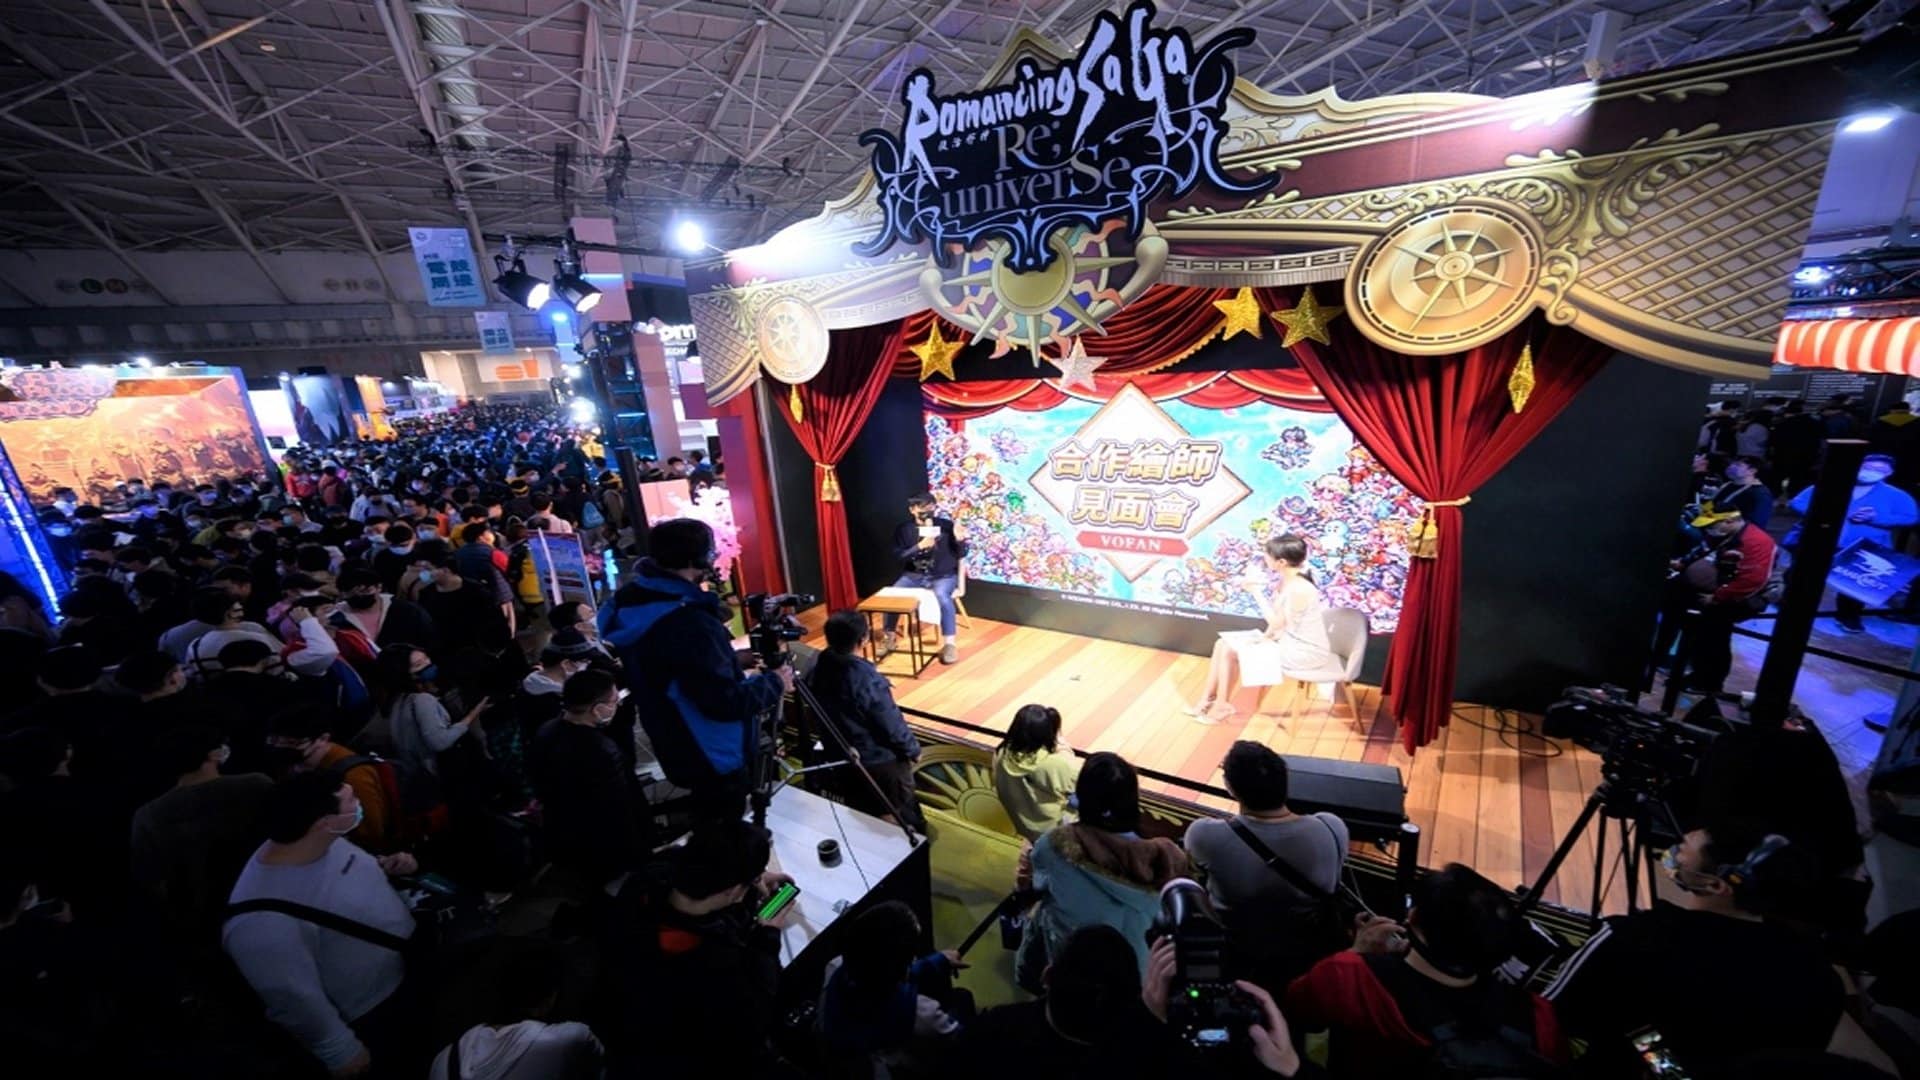 Kena: Bridge of Spirits Wins Big at the Taipei Game Show's Indie Game  Awards 2022; Full List of Winners